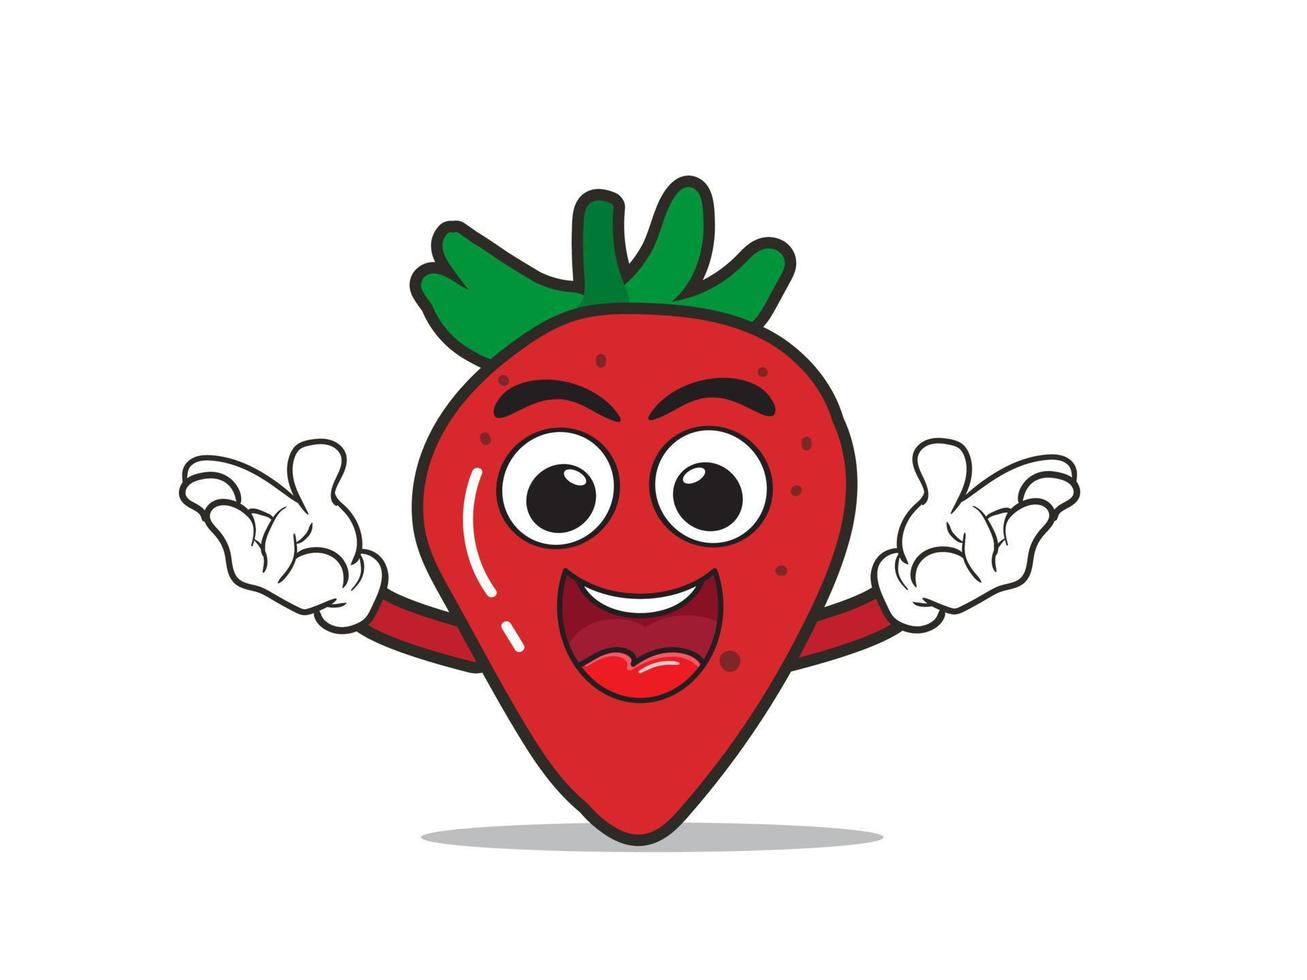 cute strawberry cartoon character, mascot vector illustration